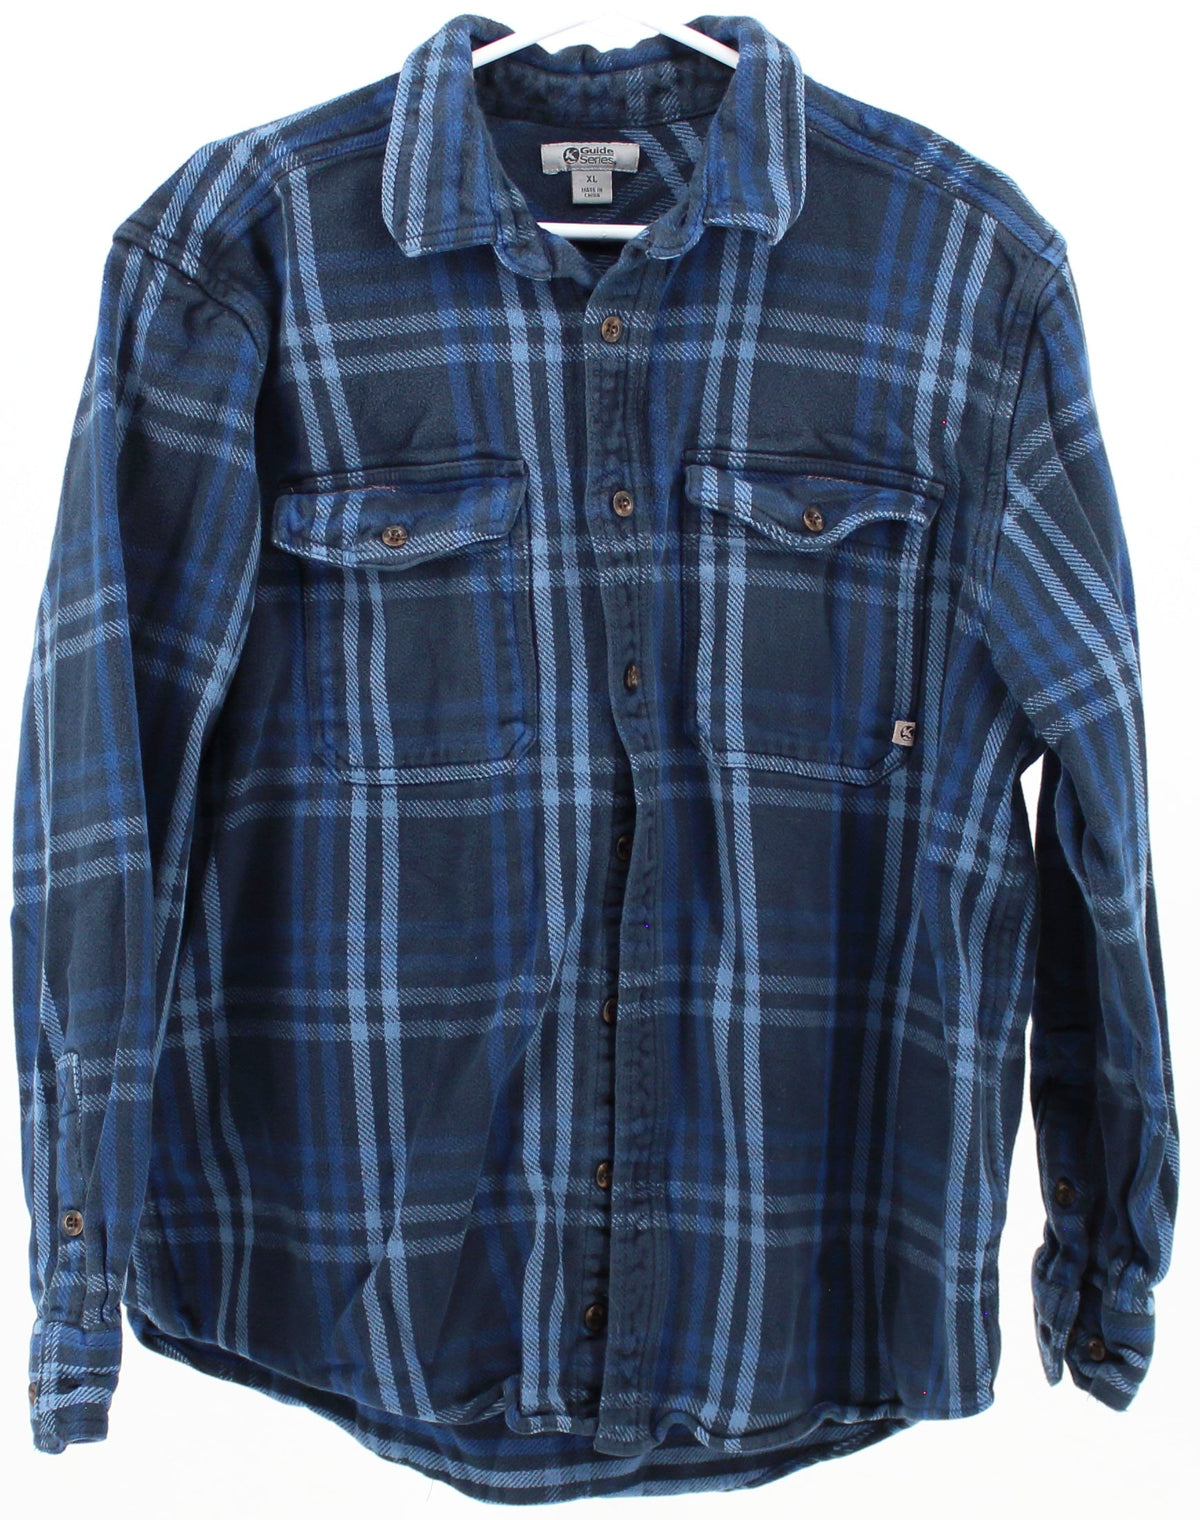 Guide Series Blue Plaid Thick Flannel Shirt